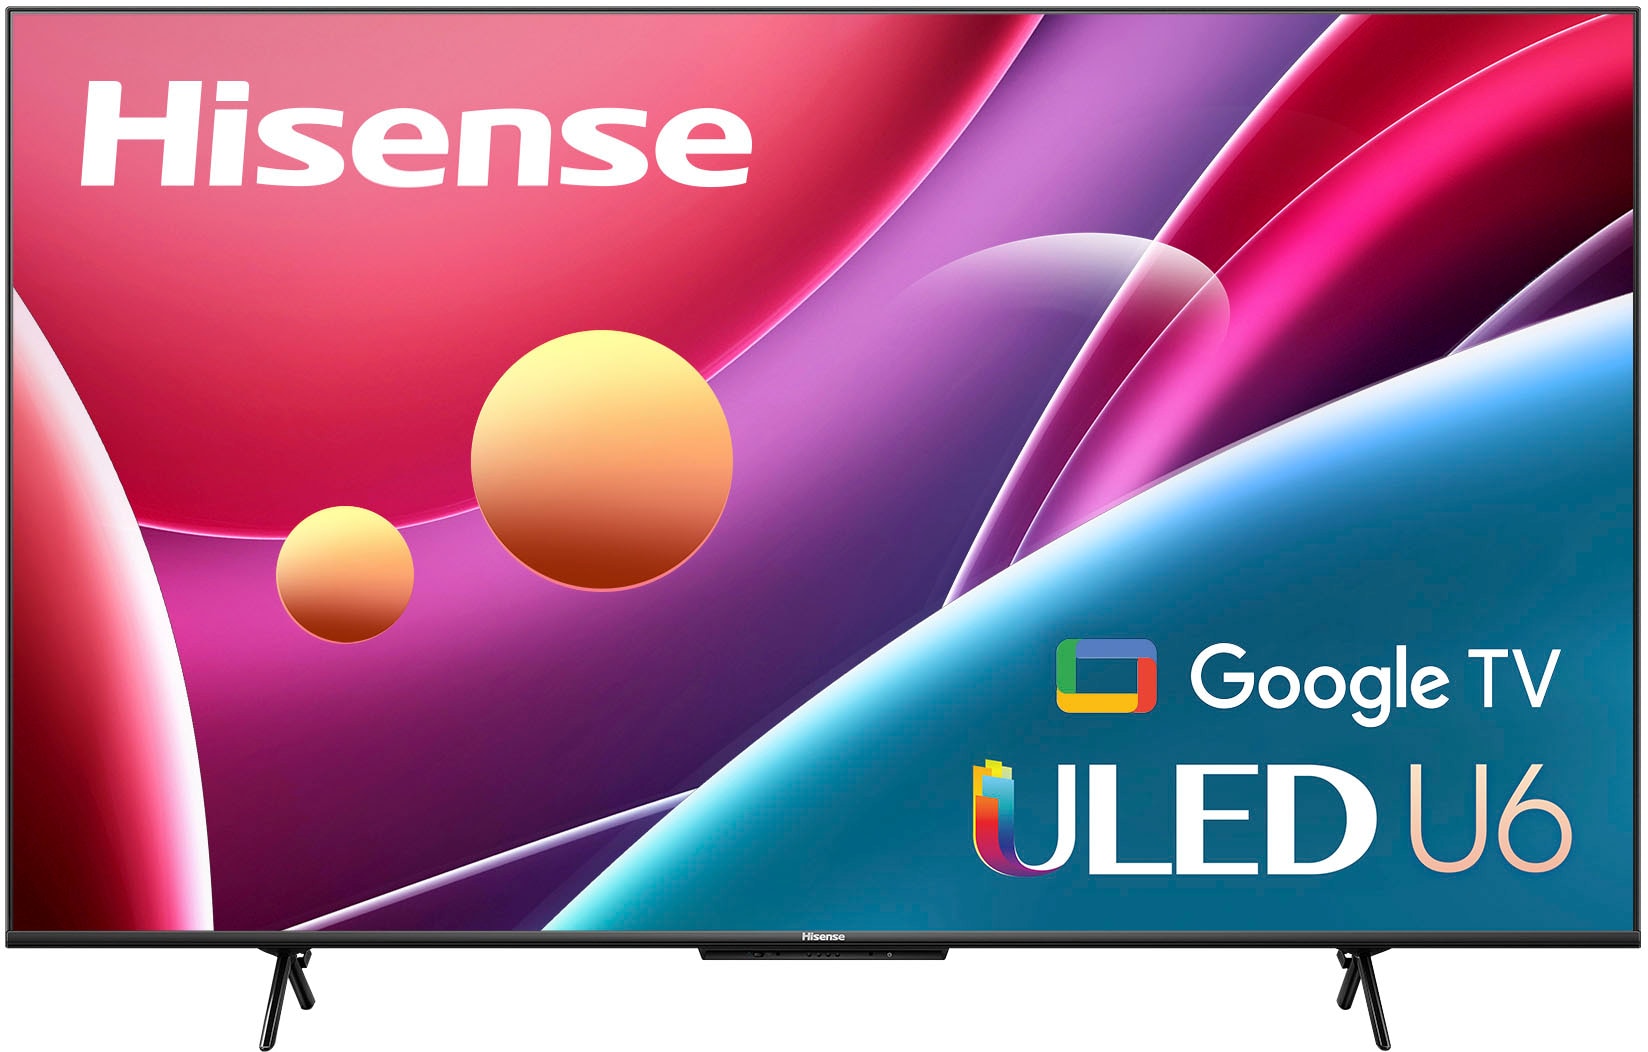 BrandsMart USA or Best Buy Price Match: Hisense 75" U6H ULED 4K UHD Google Smart TV 2022  $678.88 - $100 Hisense Rebate